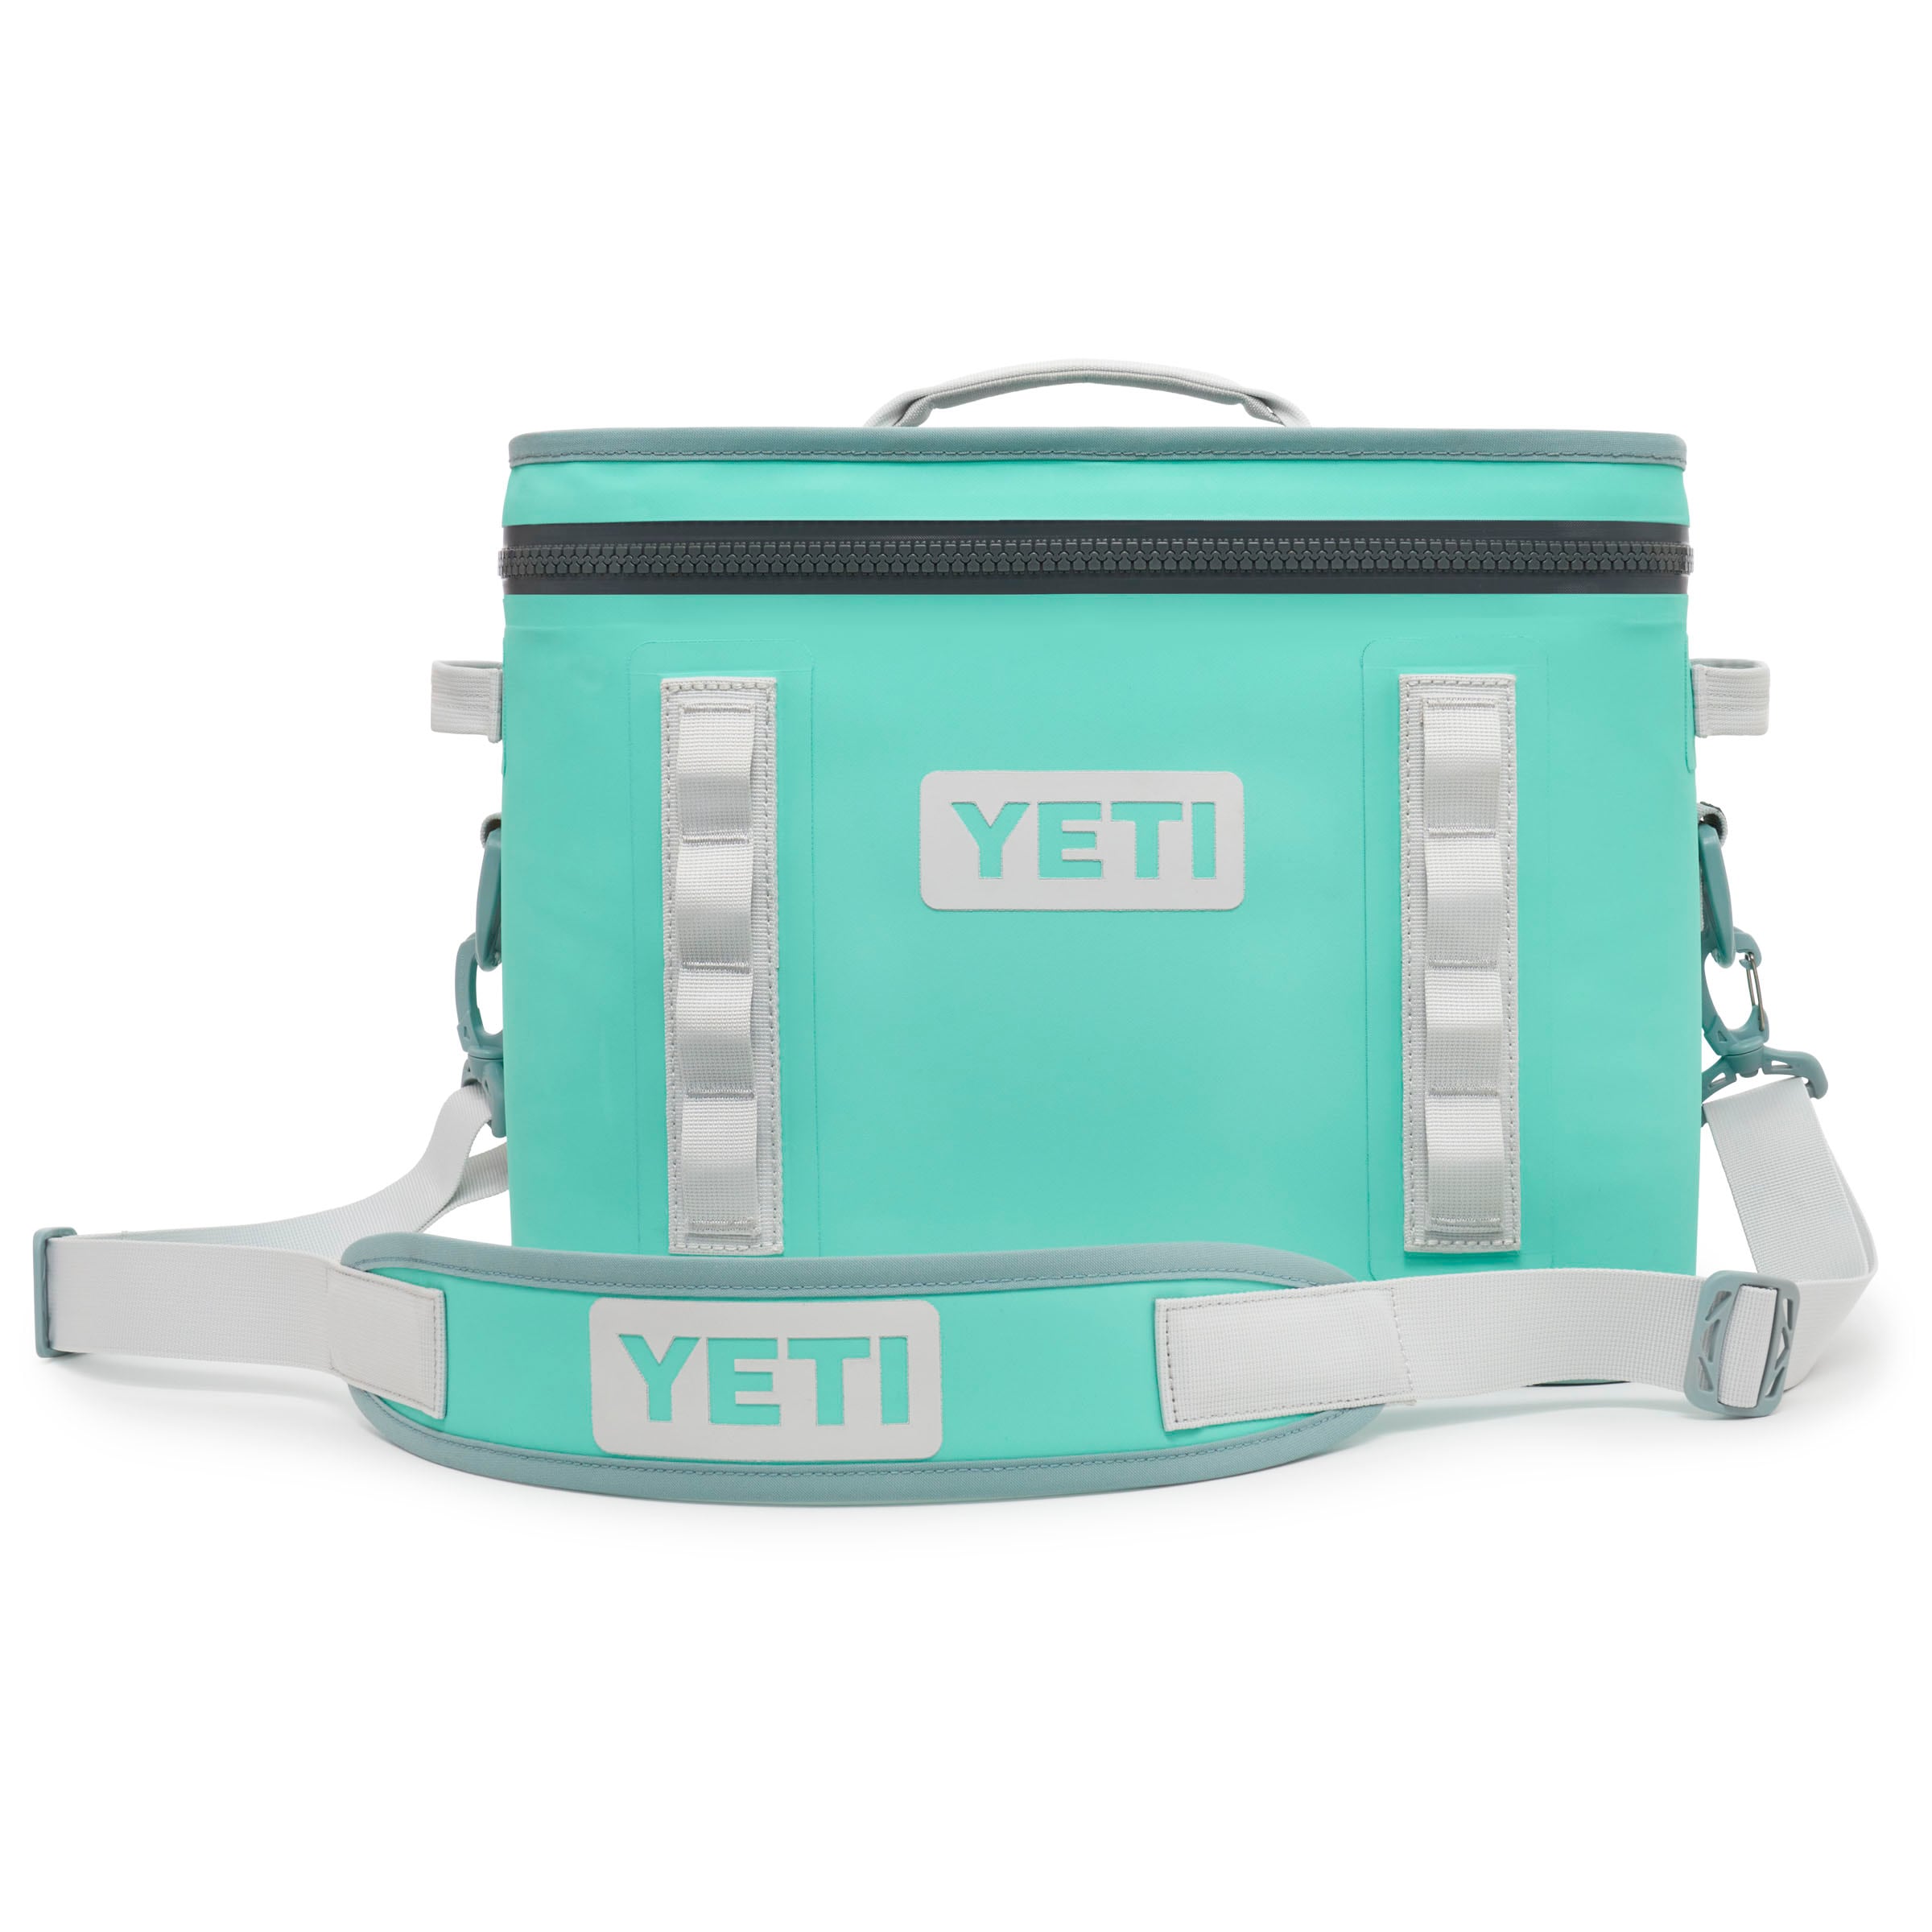 YETI Hopper Flip 18 Insulated Personal Cooler, Aquifer Blue in the